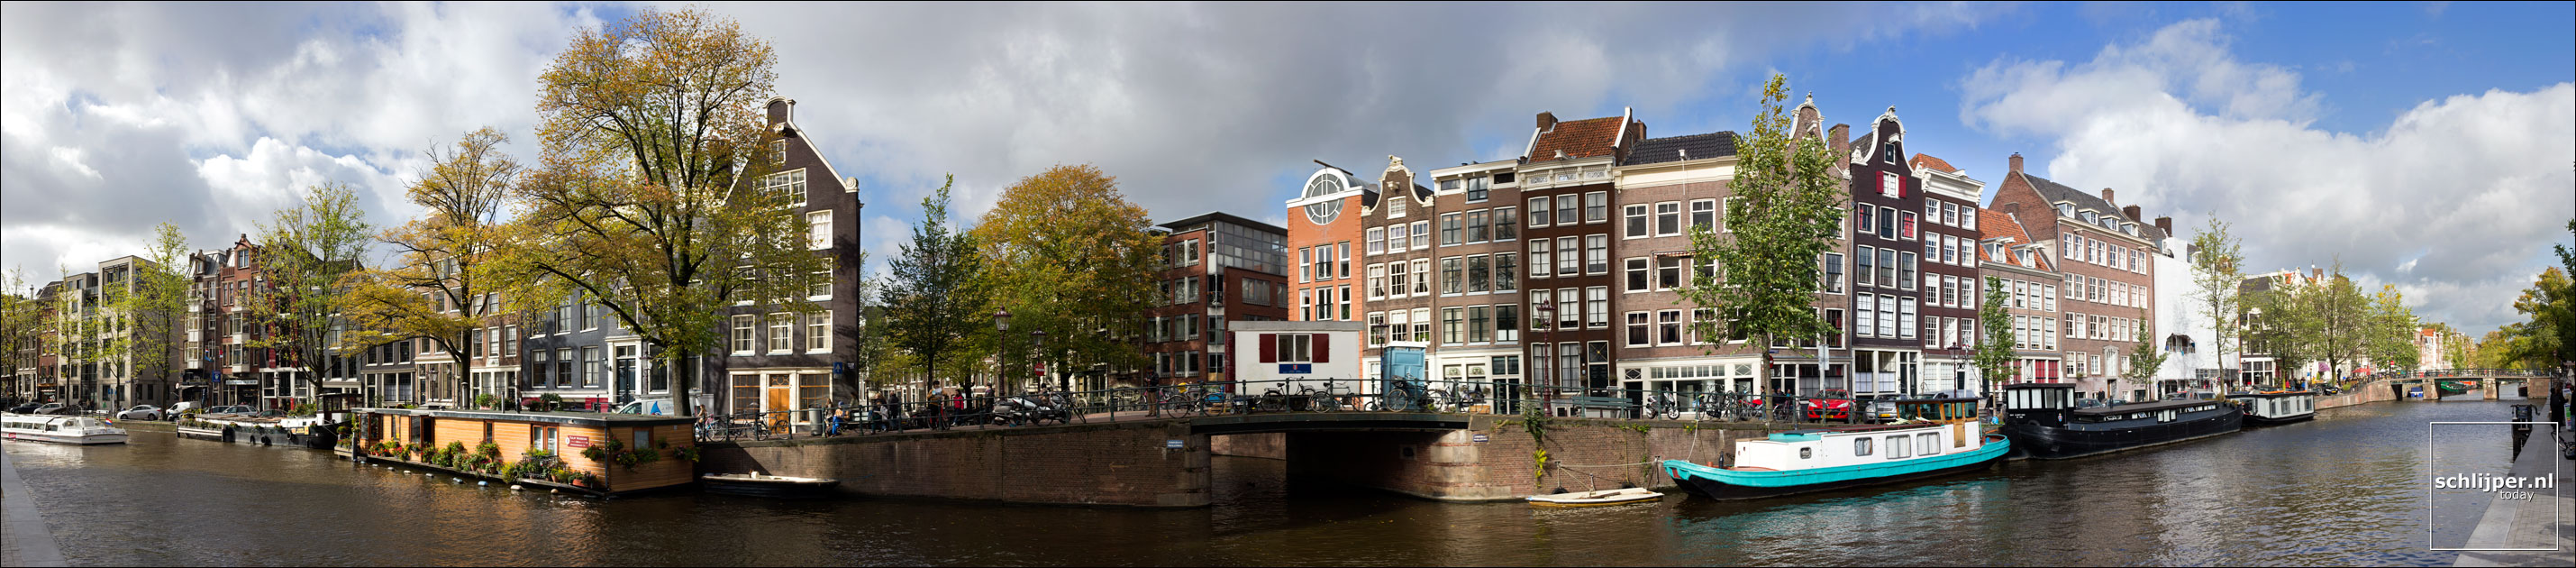 Nederland, Amsterdam, 17 oktober 2013